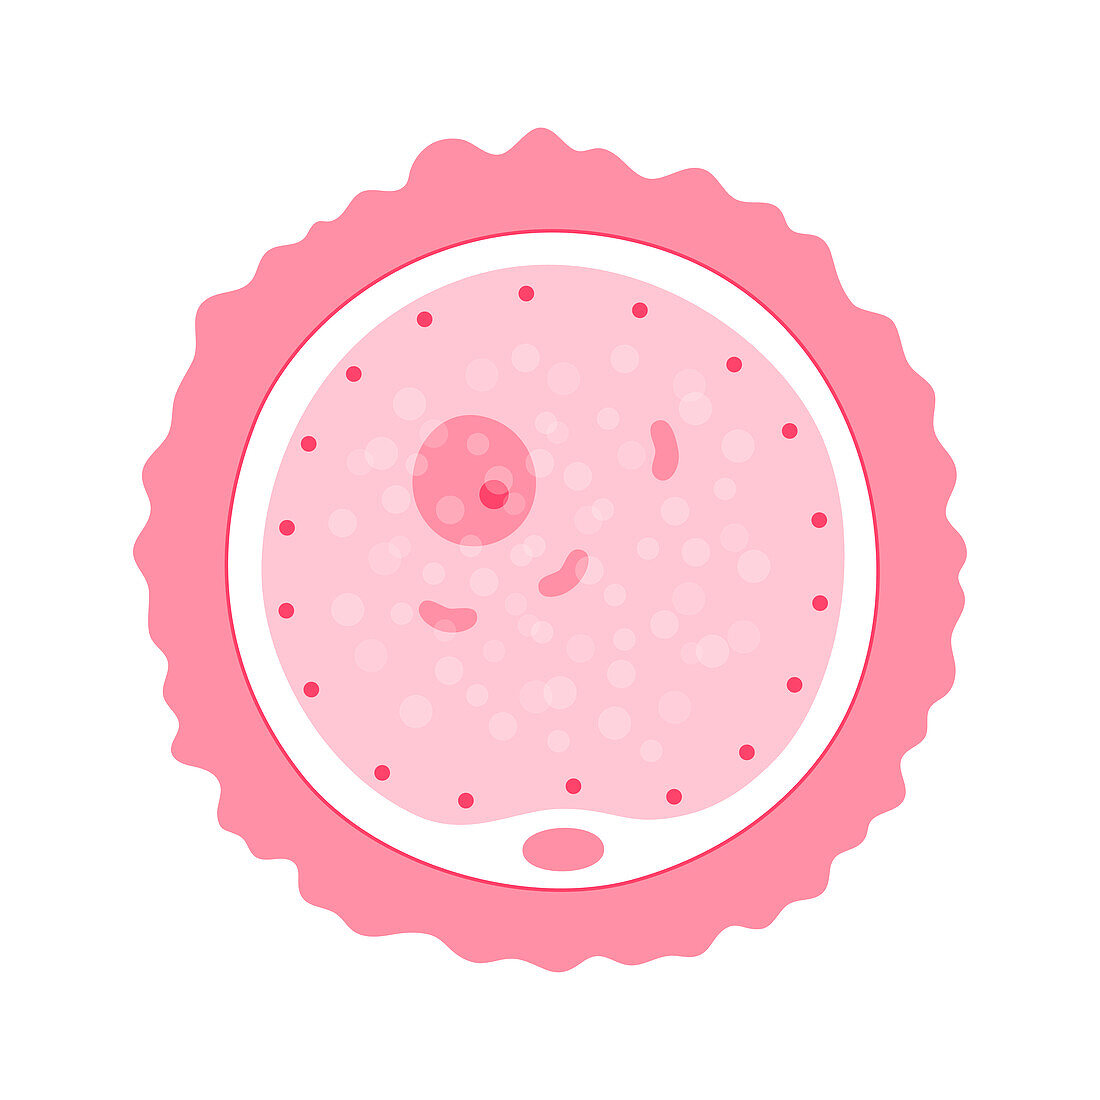 Human egg cell, illustration